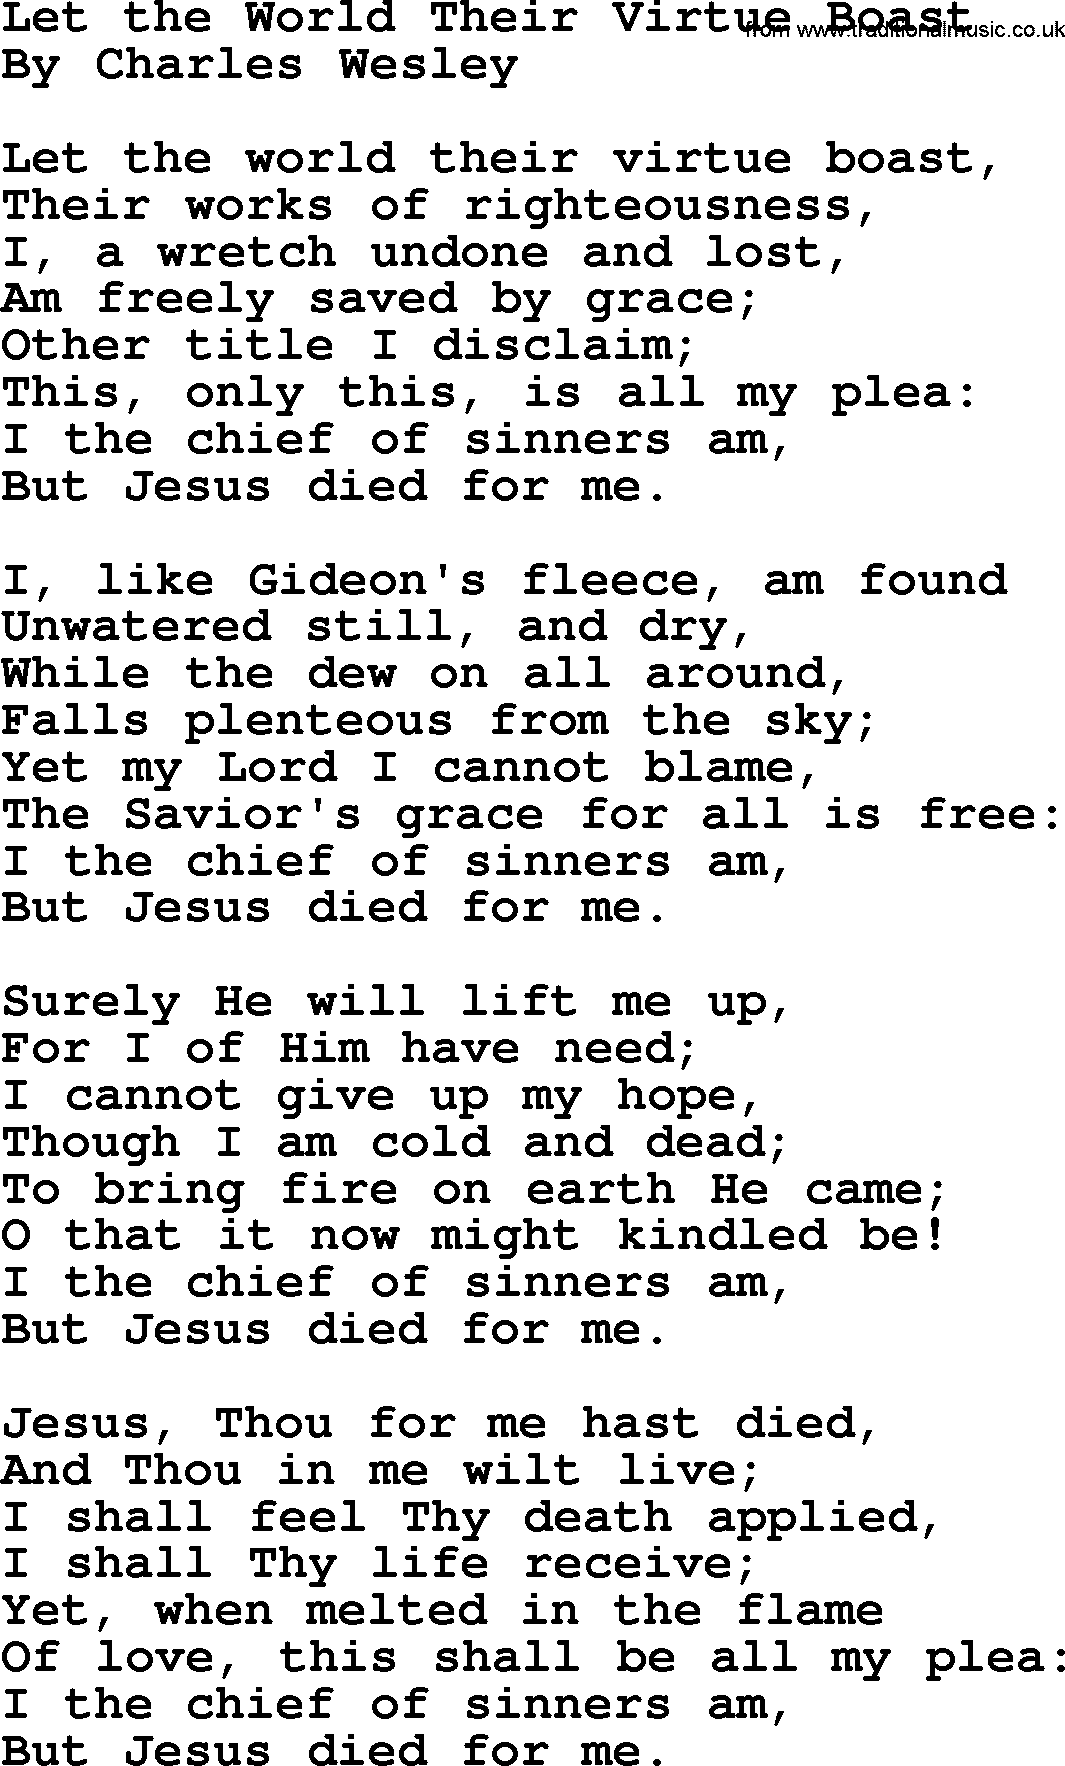 Charles Wesley hymn: Let The World Their Virtue Boast, lyrics